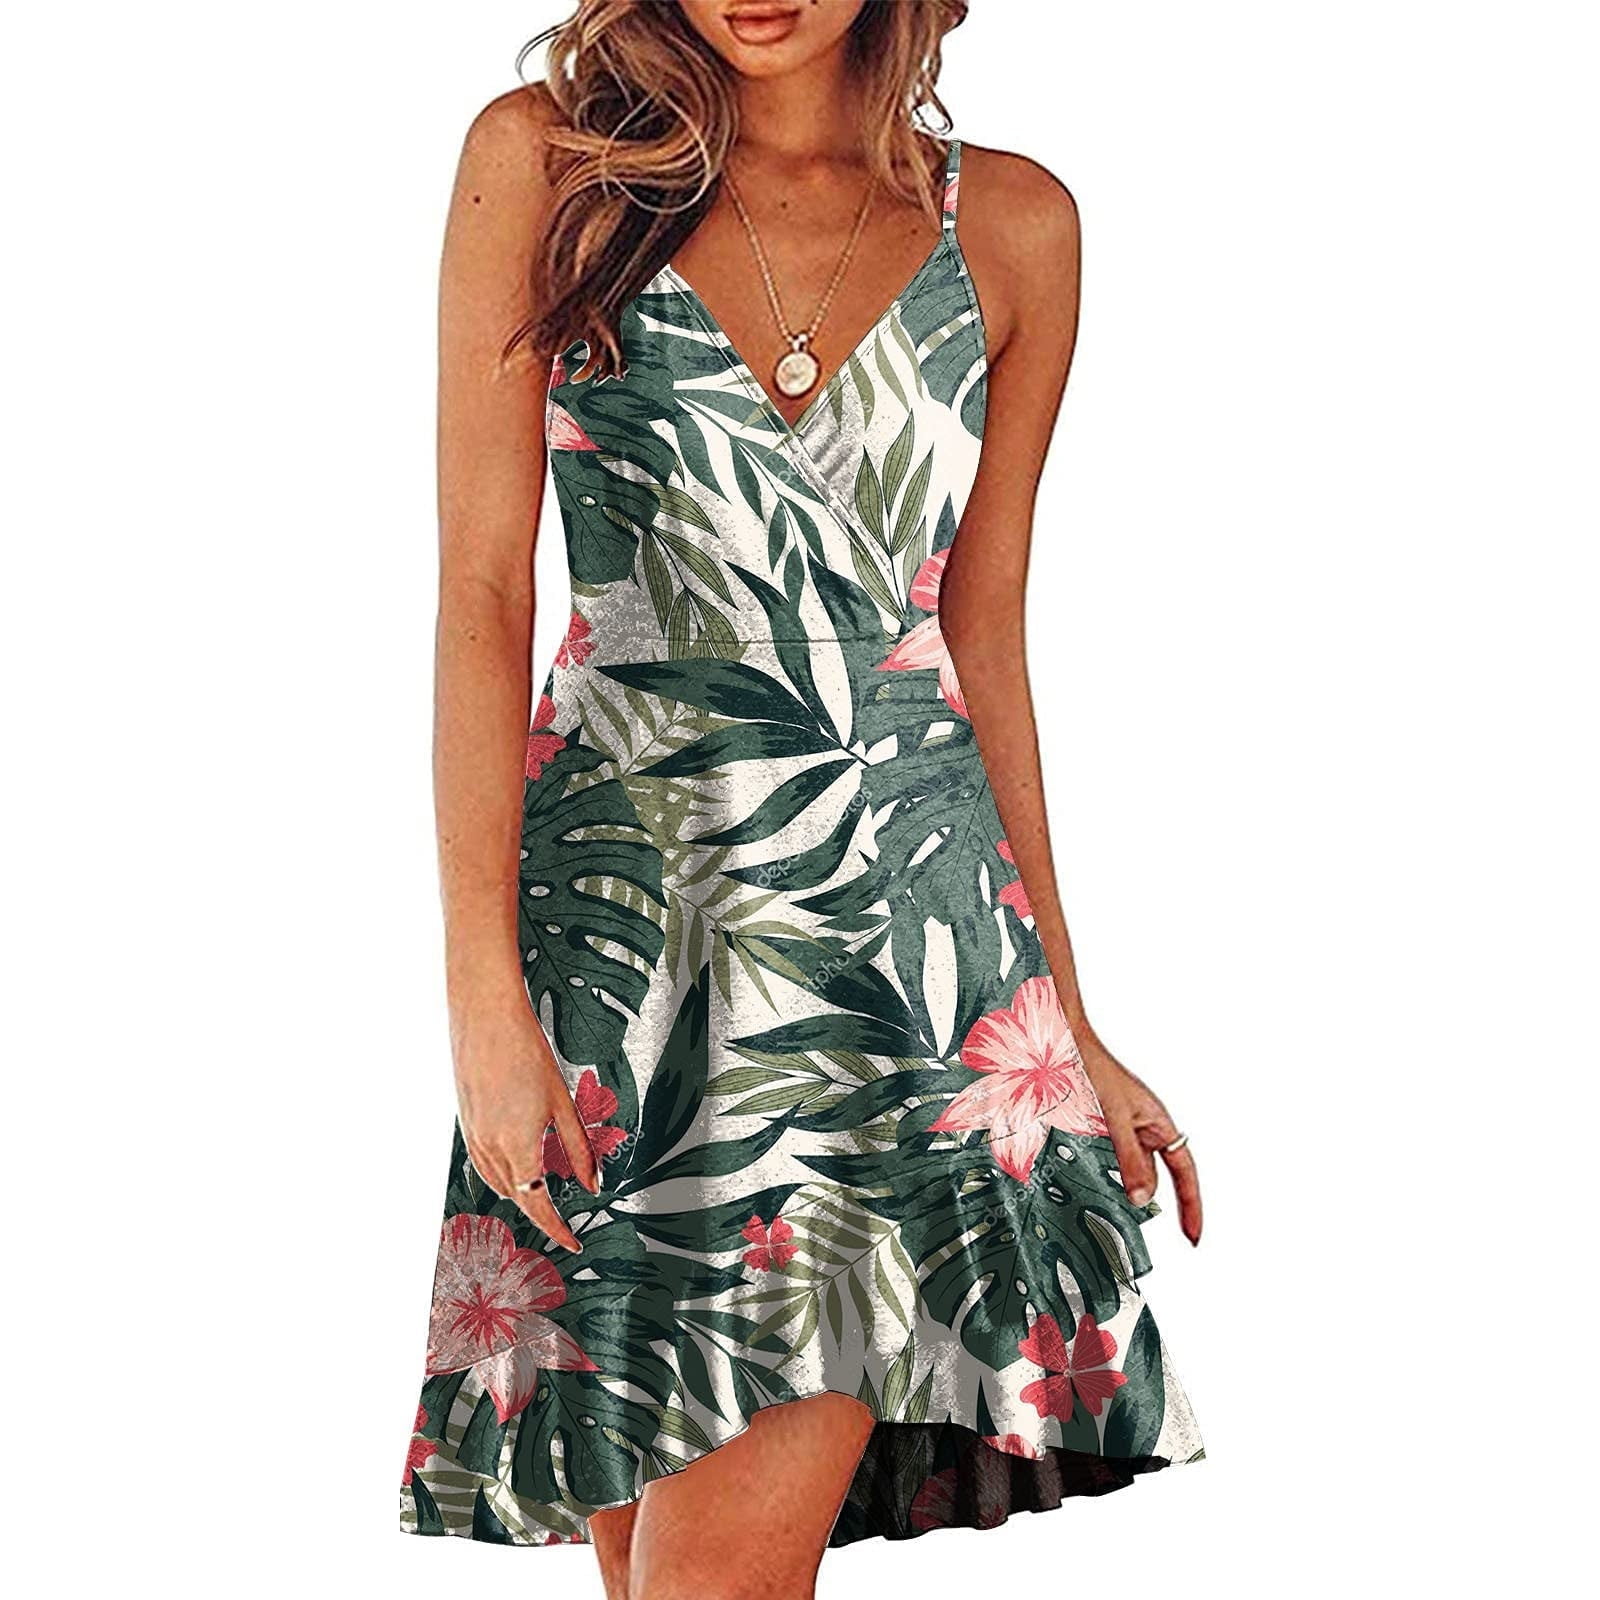 qucoqpe Women's Summer Dress Floral Spaghetti Strap Sleeveless V-Neck  Casual Swing Sundress on Clearance 